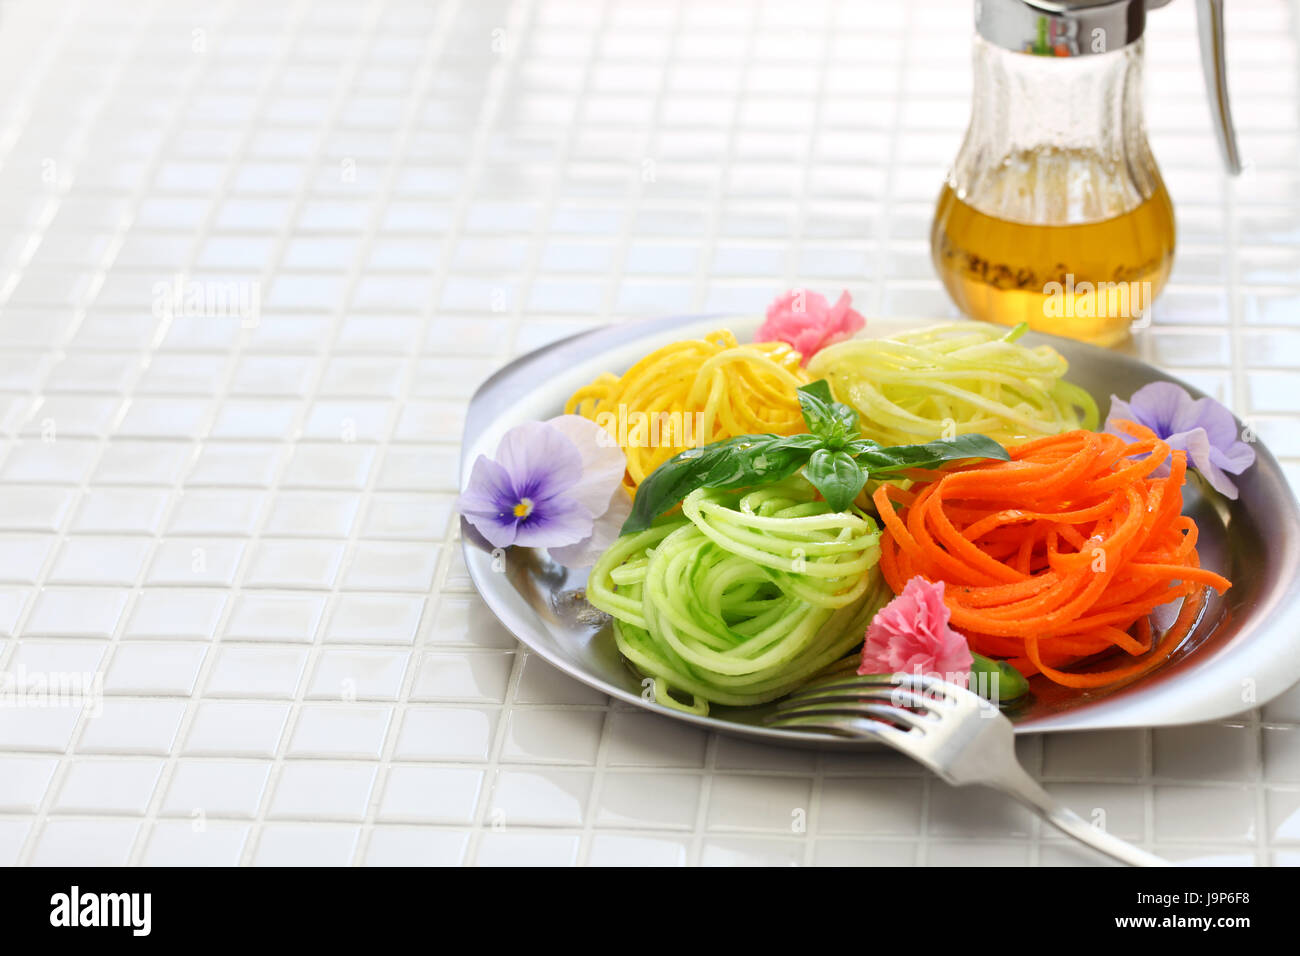 healthy diet vegetable noodles salad Stock Photo